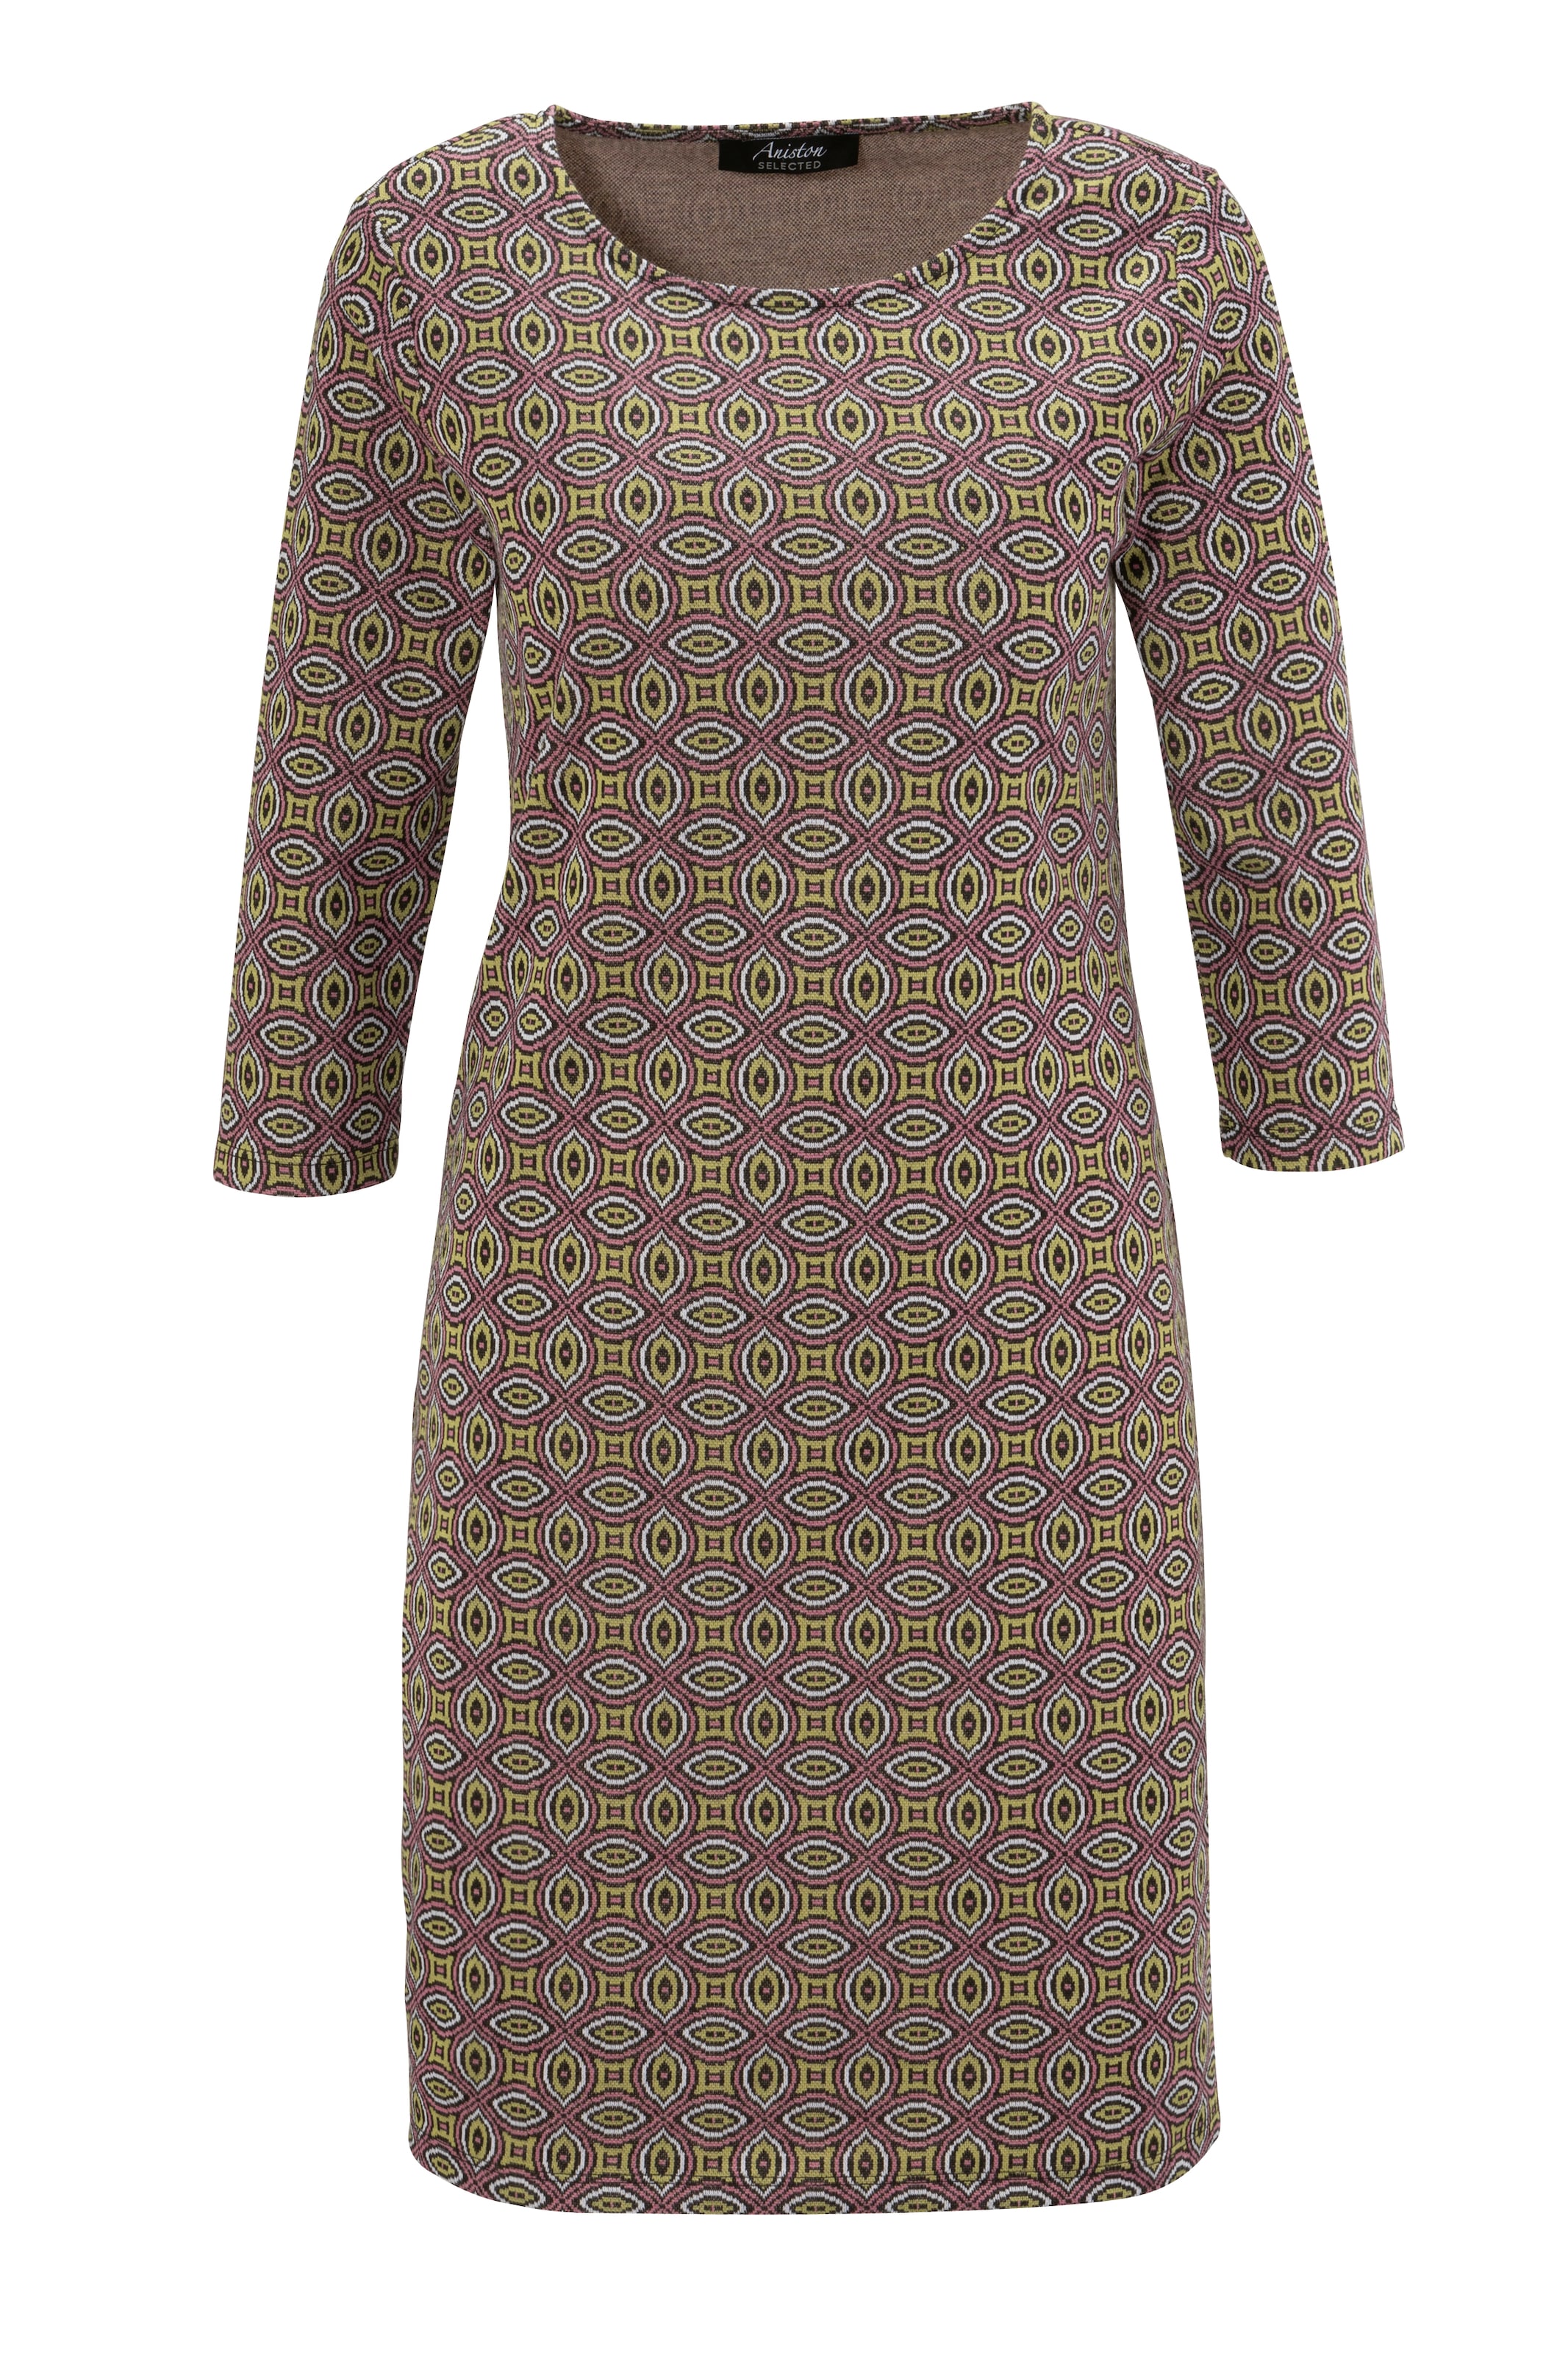 ♕ Aniston SELECTED Jerseykleid, mit interessantem Muster - NEUE KOLLEKTION  versandkostenfrei auf